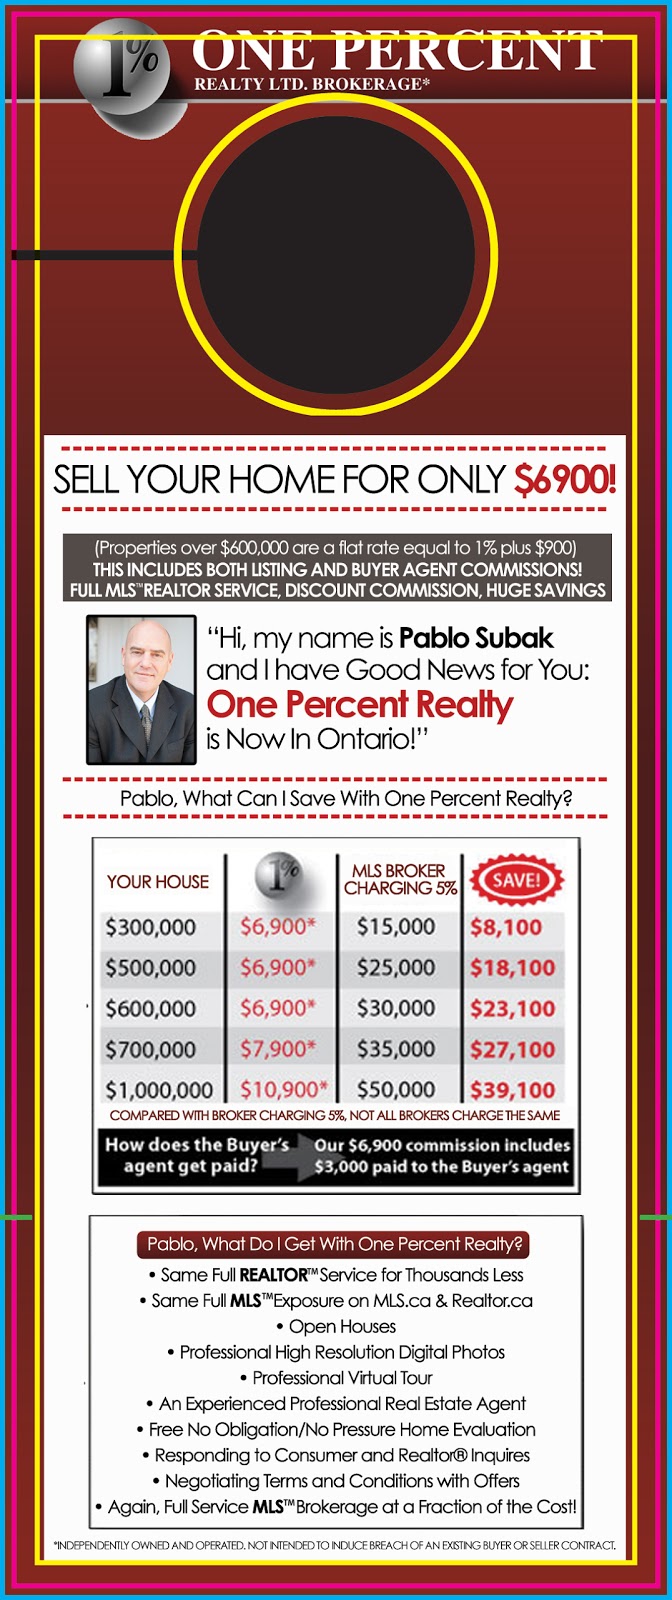 One Percent Realty Ltd. Brokerage Oakville | real estate agency | 1072 Harcroft Ct, Oakville, ON L6H 3K5, Canada | 4168044120 OR +1 416-804-4120